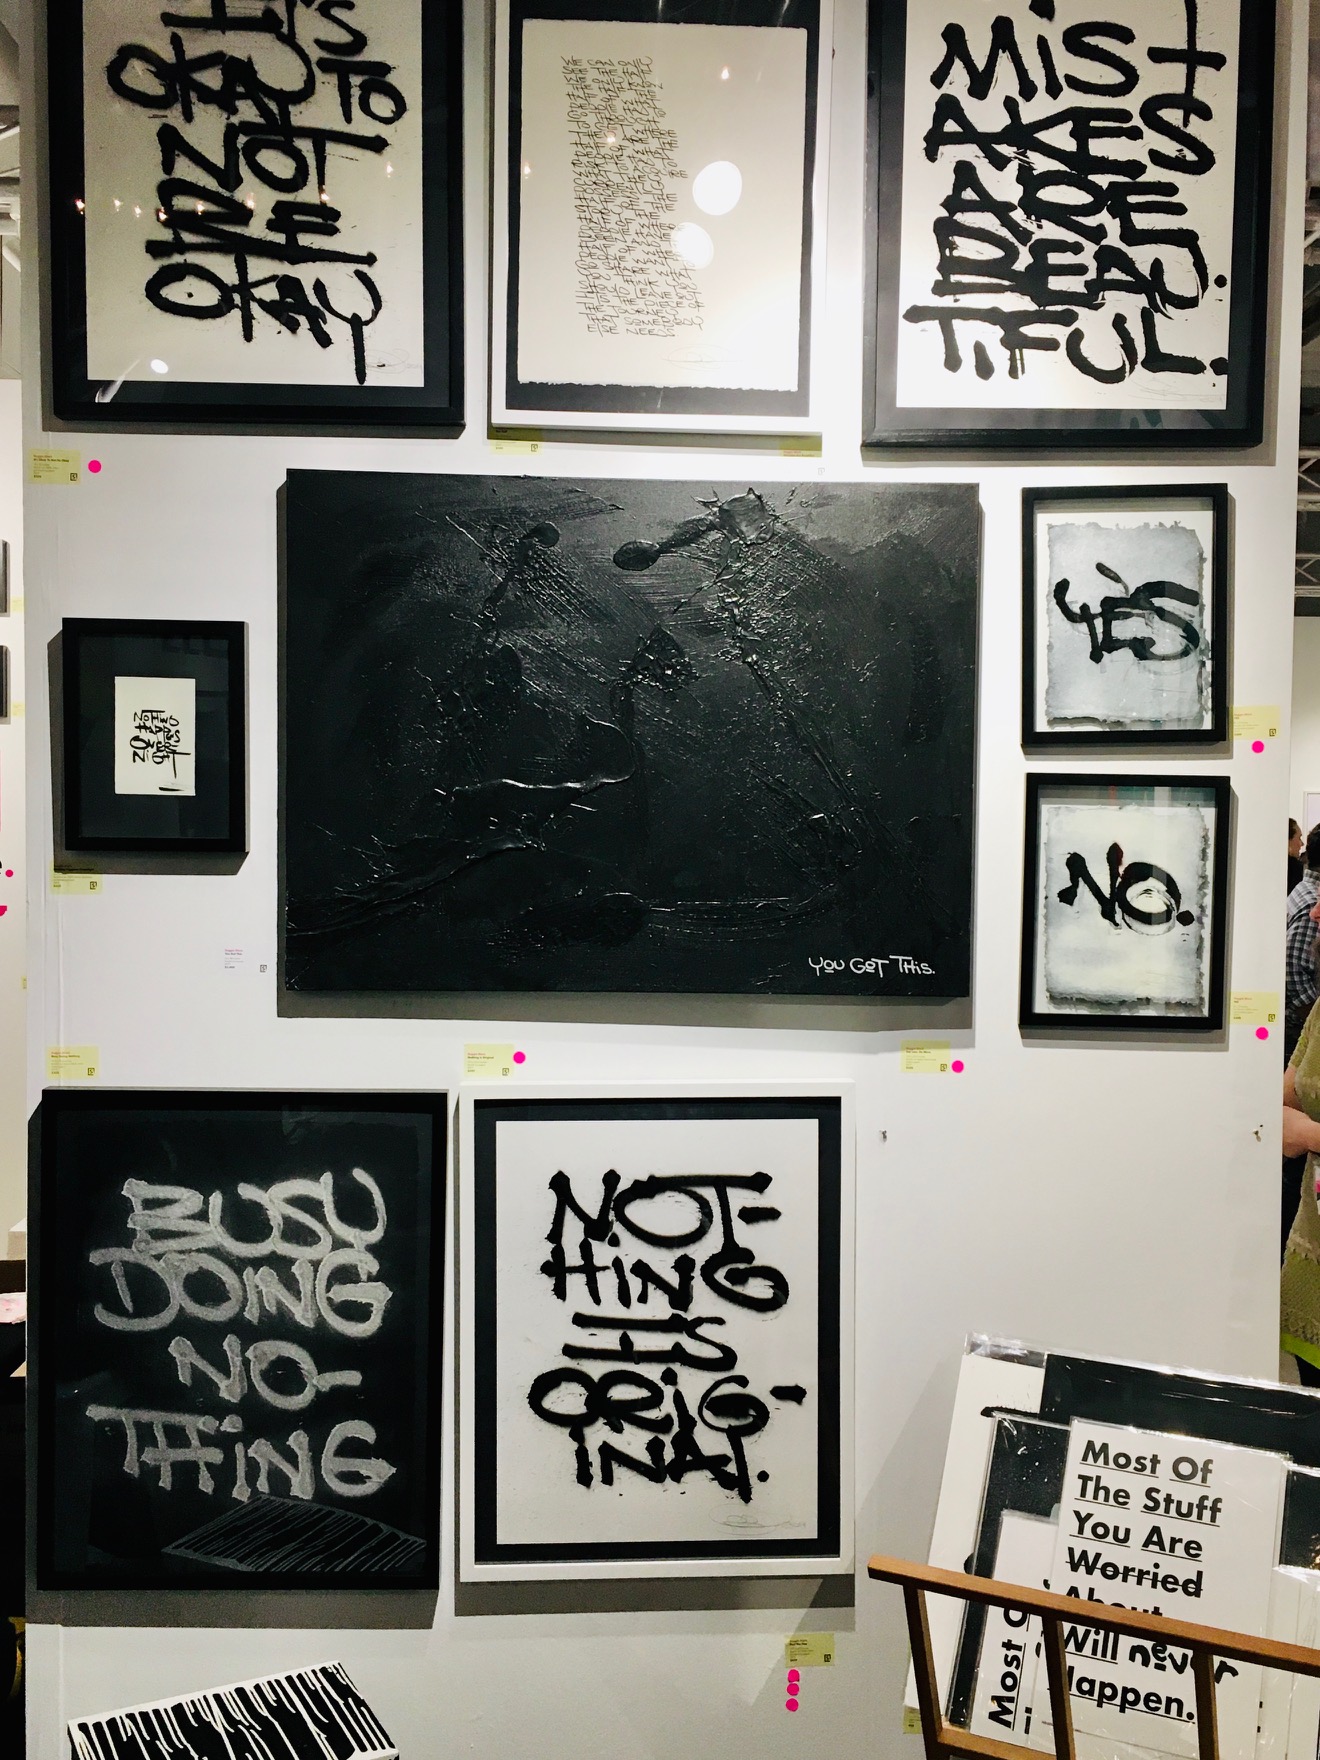 DC Area Artist Reggie Black displays his artwork at the Superfine Art Fair.